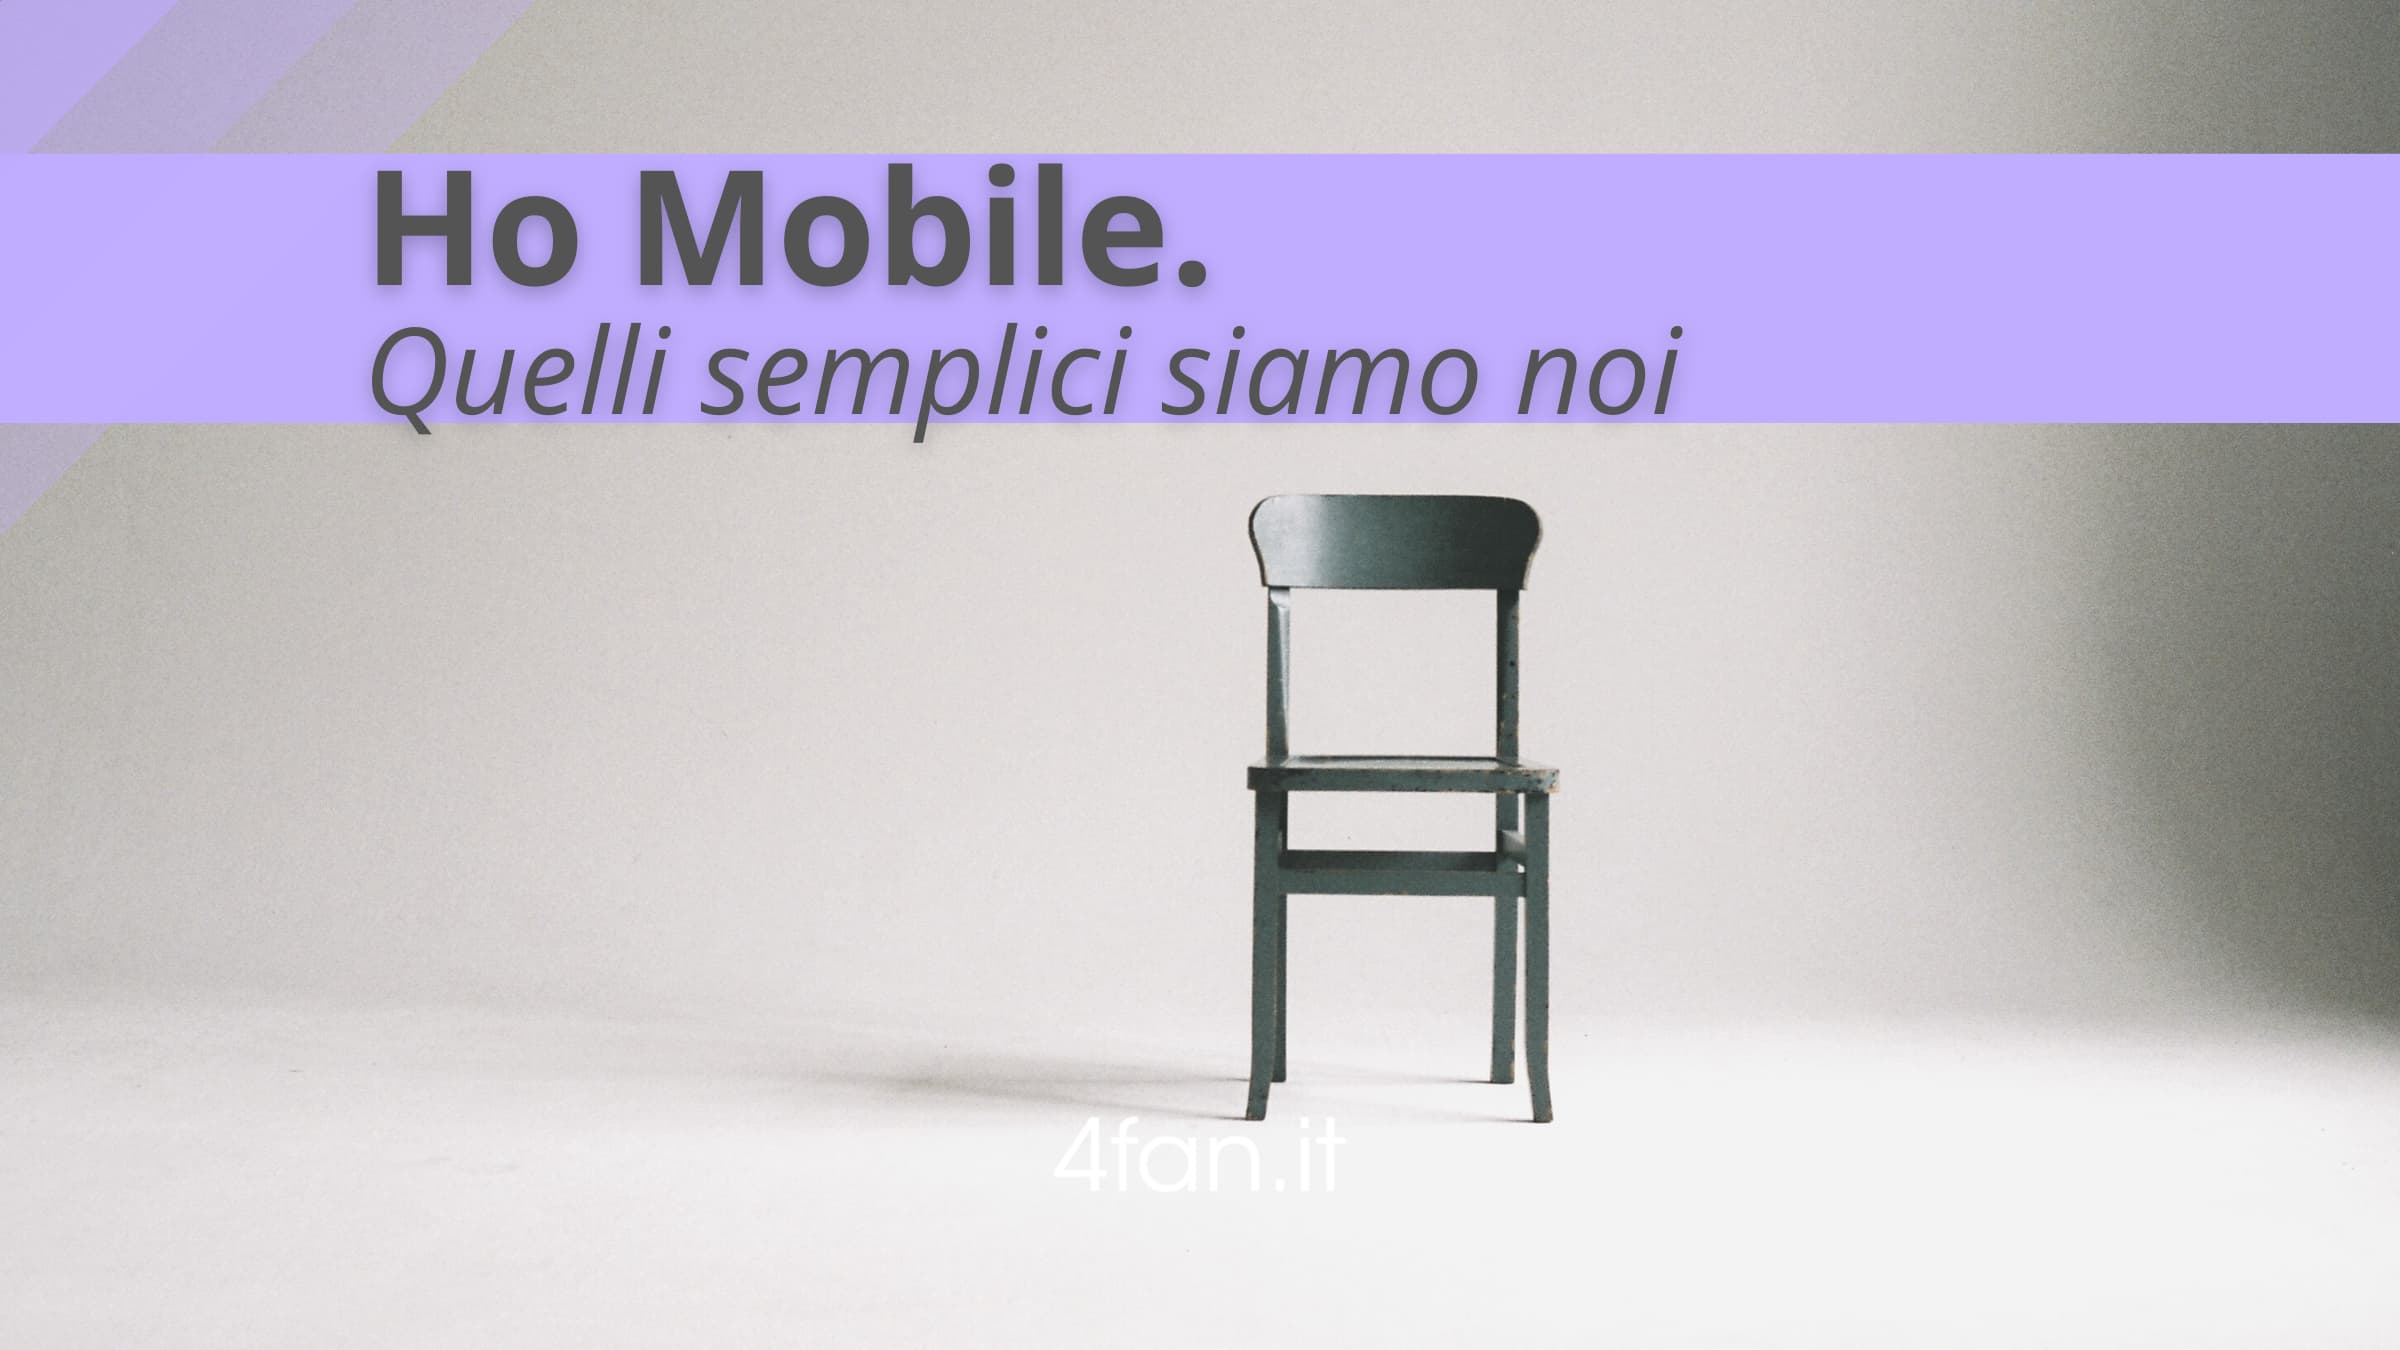 Ho Mobile semplici